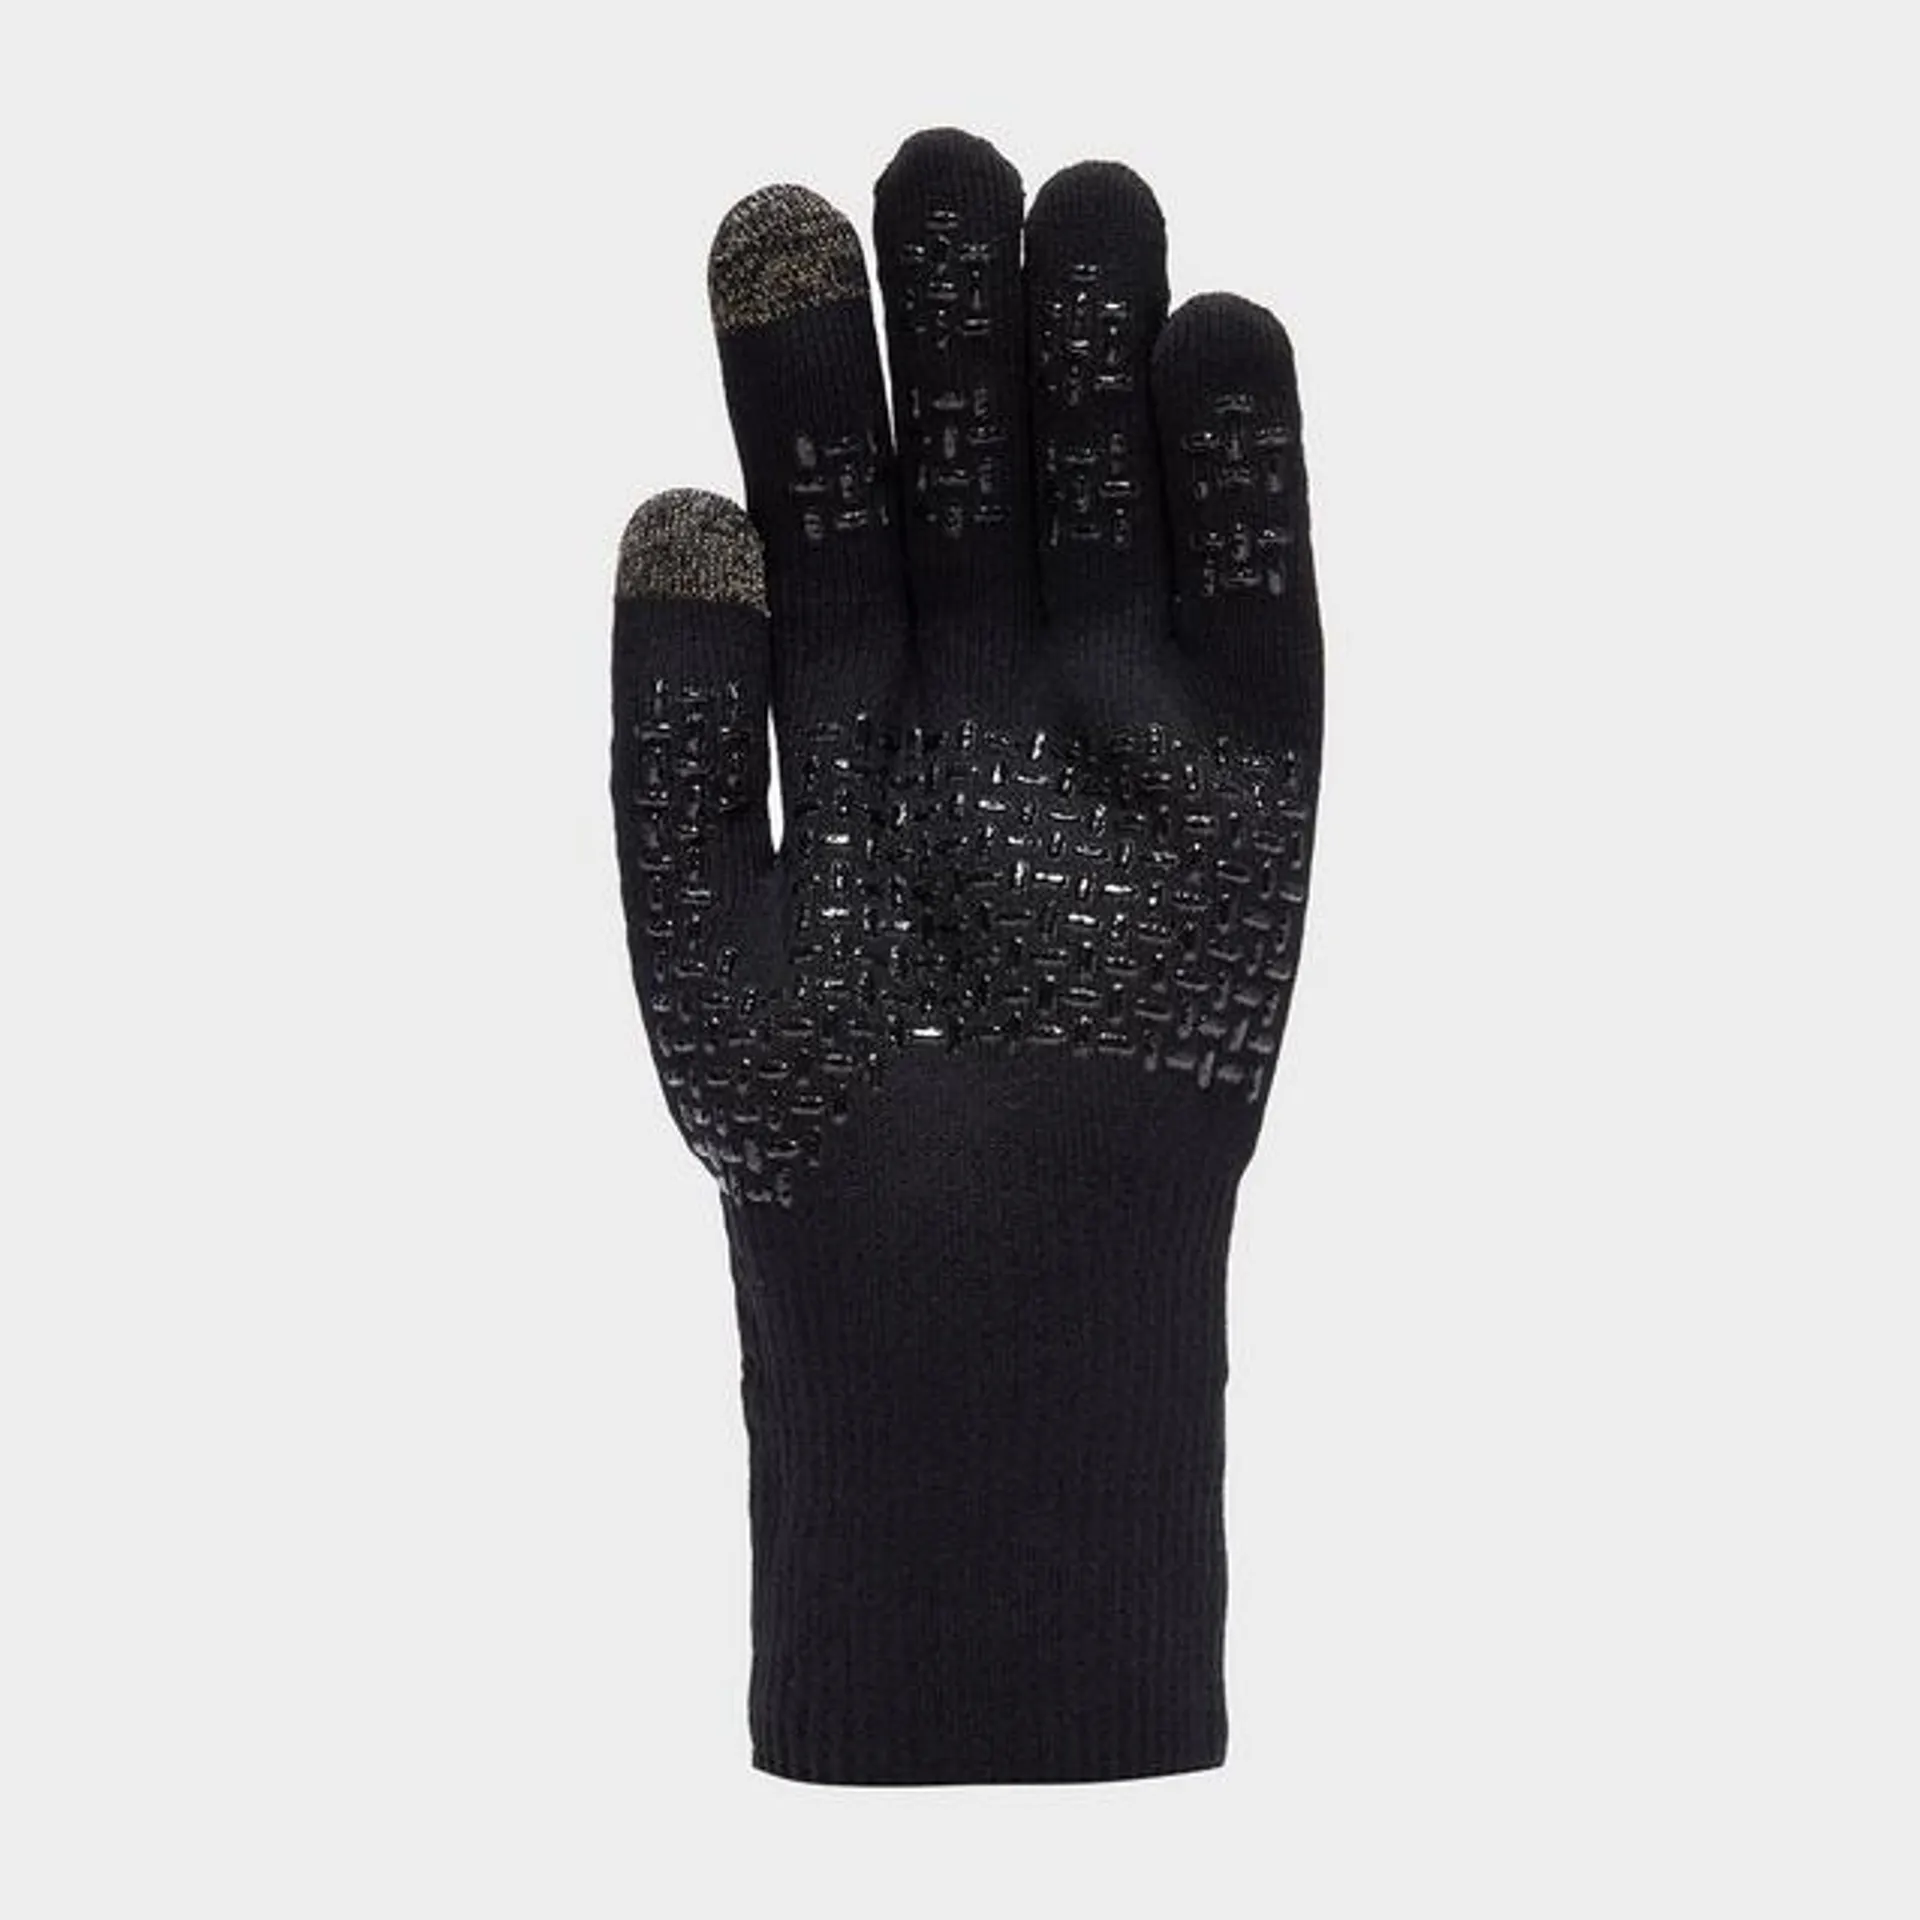 Waterproof All Weather Ultra Grip Glove